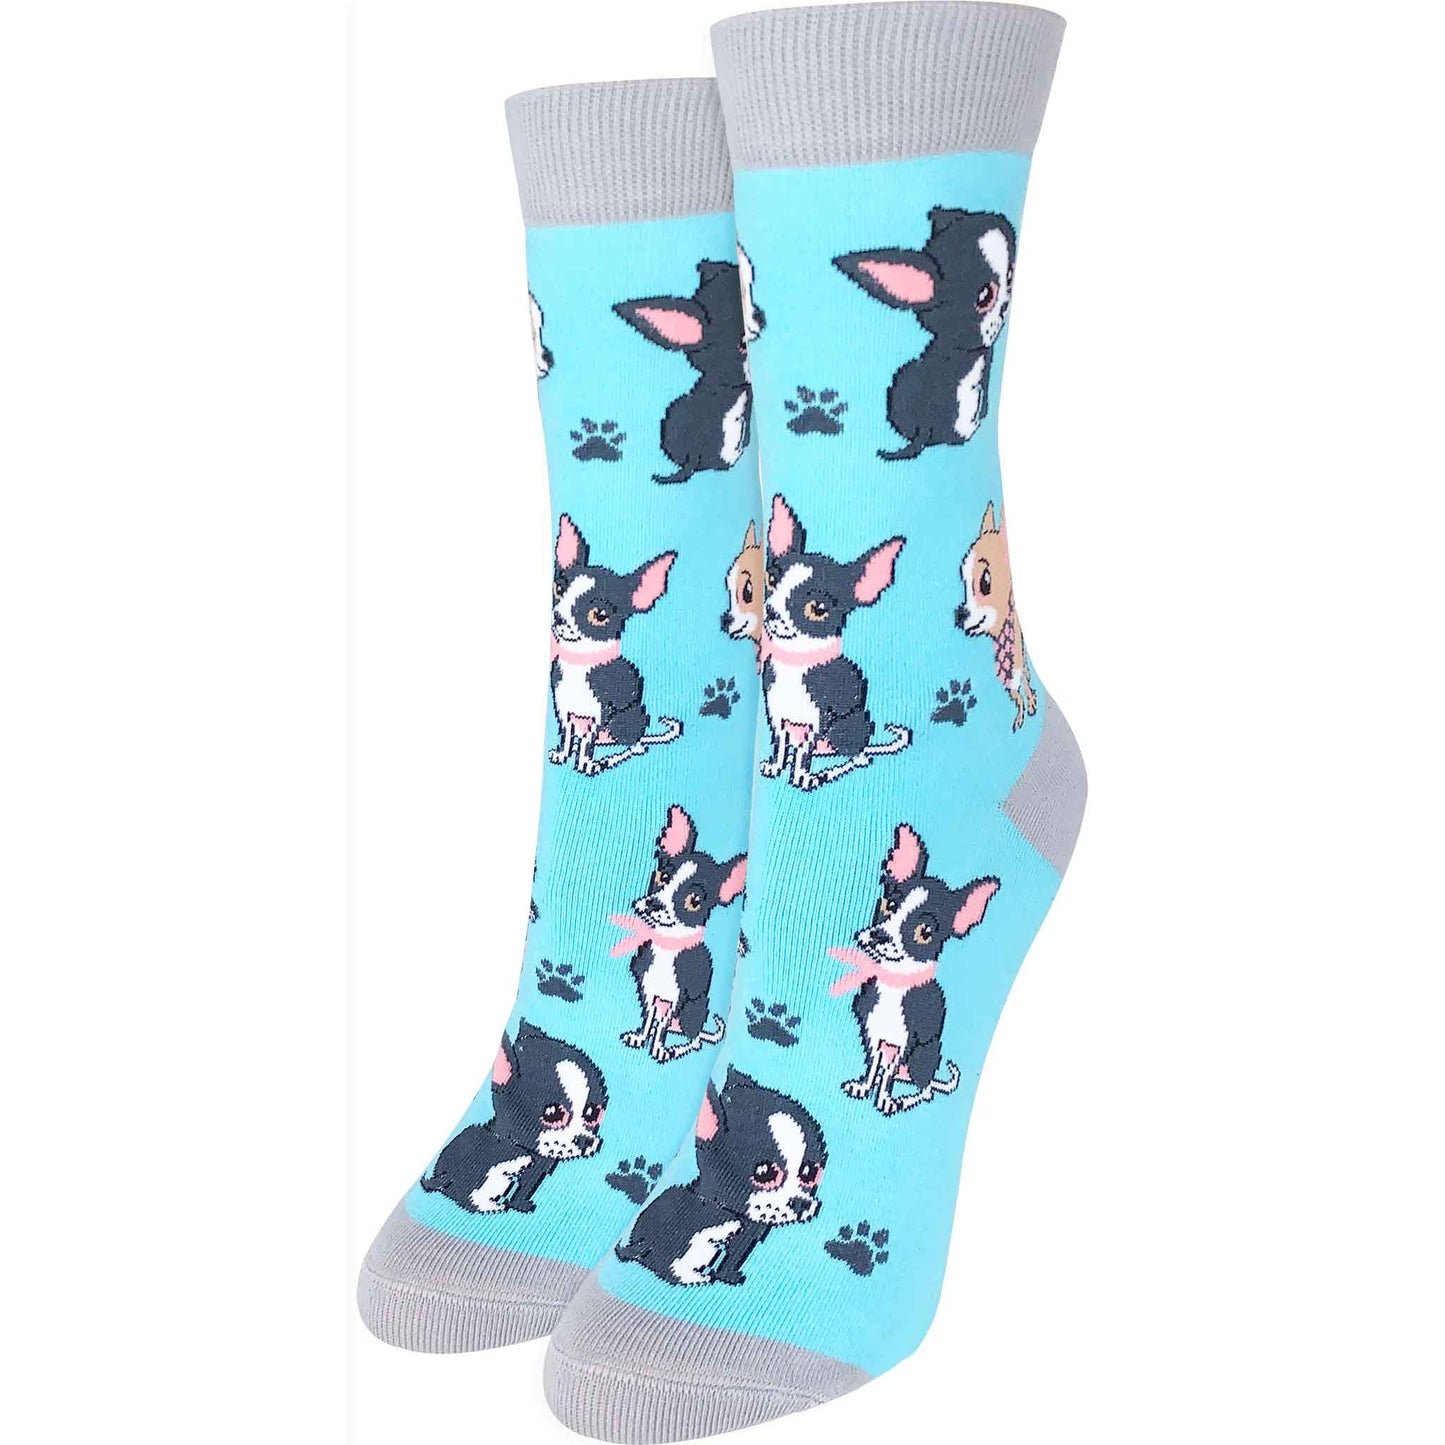 Chihuahua - Imagery Socks